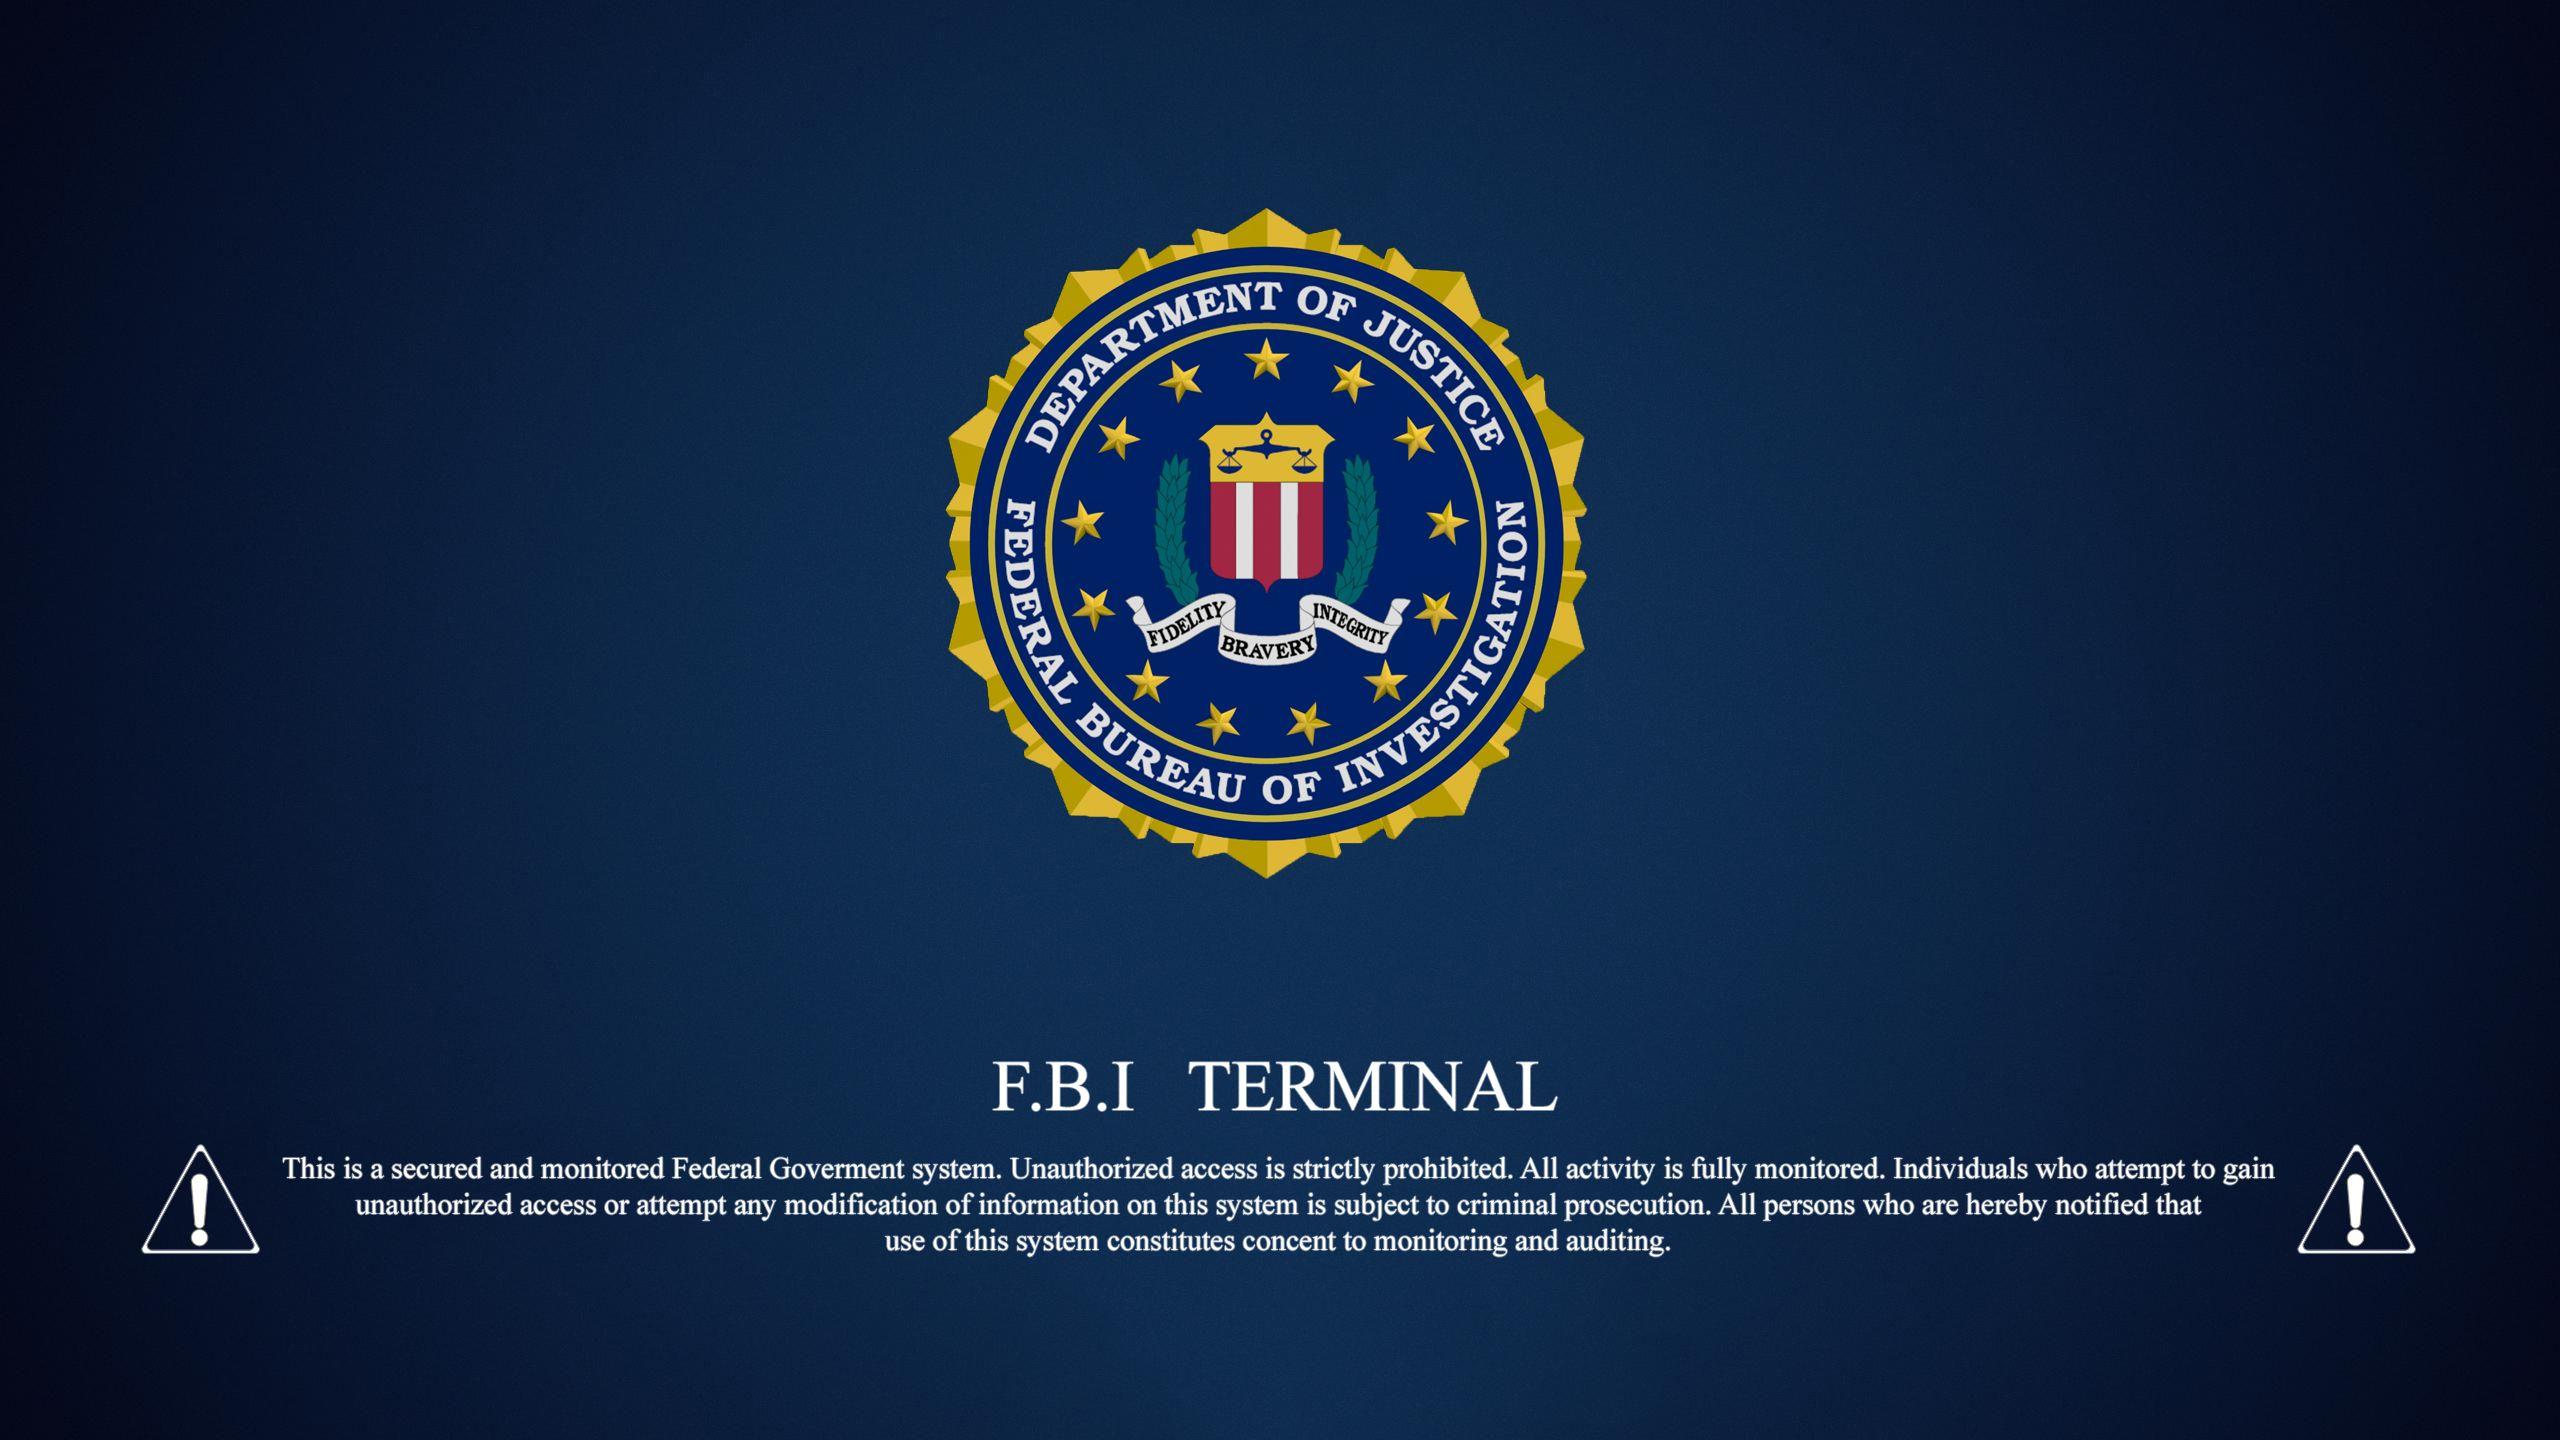 FBI Terminal Full HD Wallpaper and Background Imagex1440